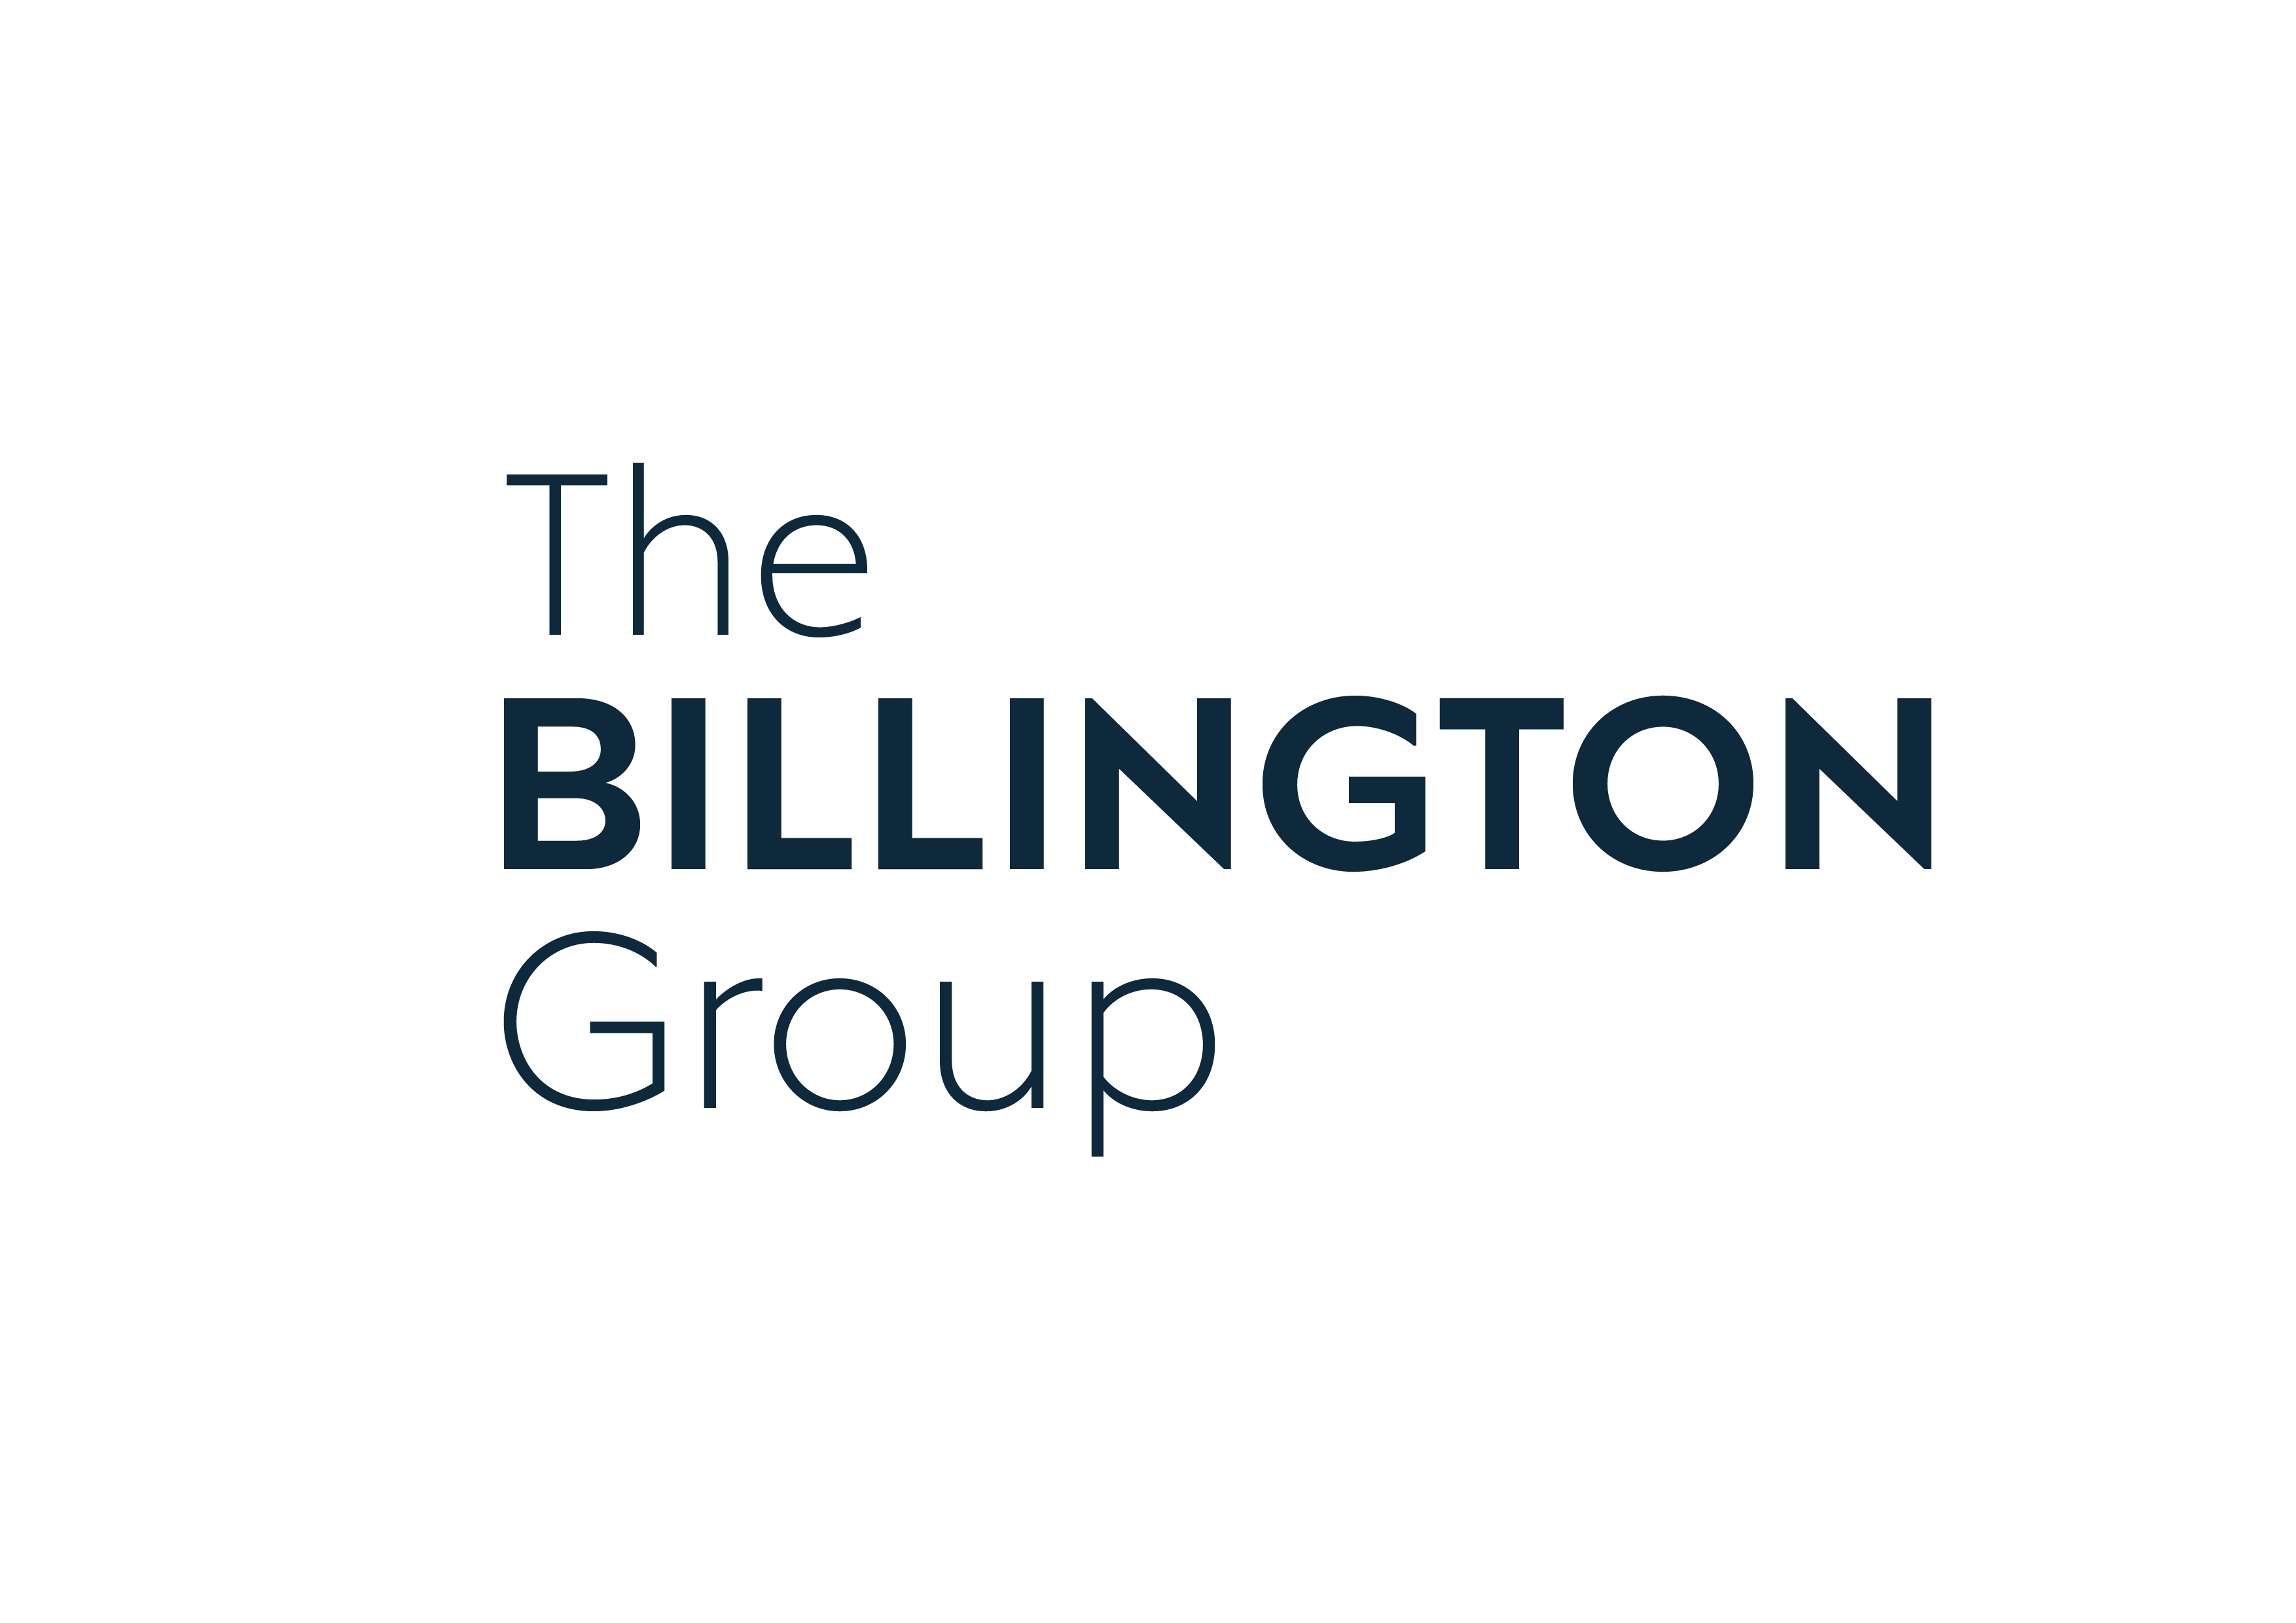 The Billington Group